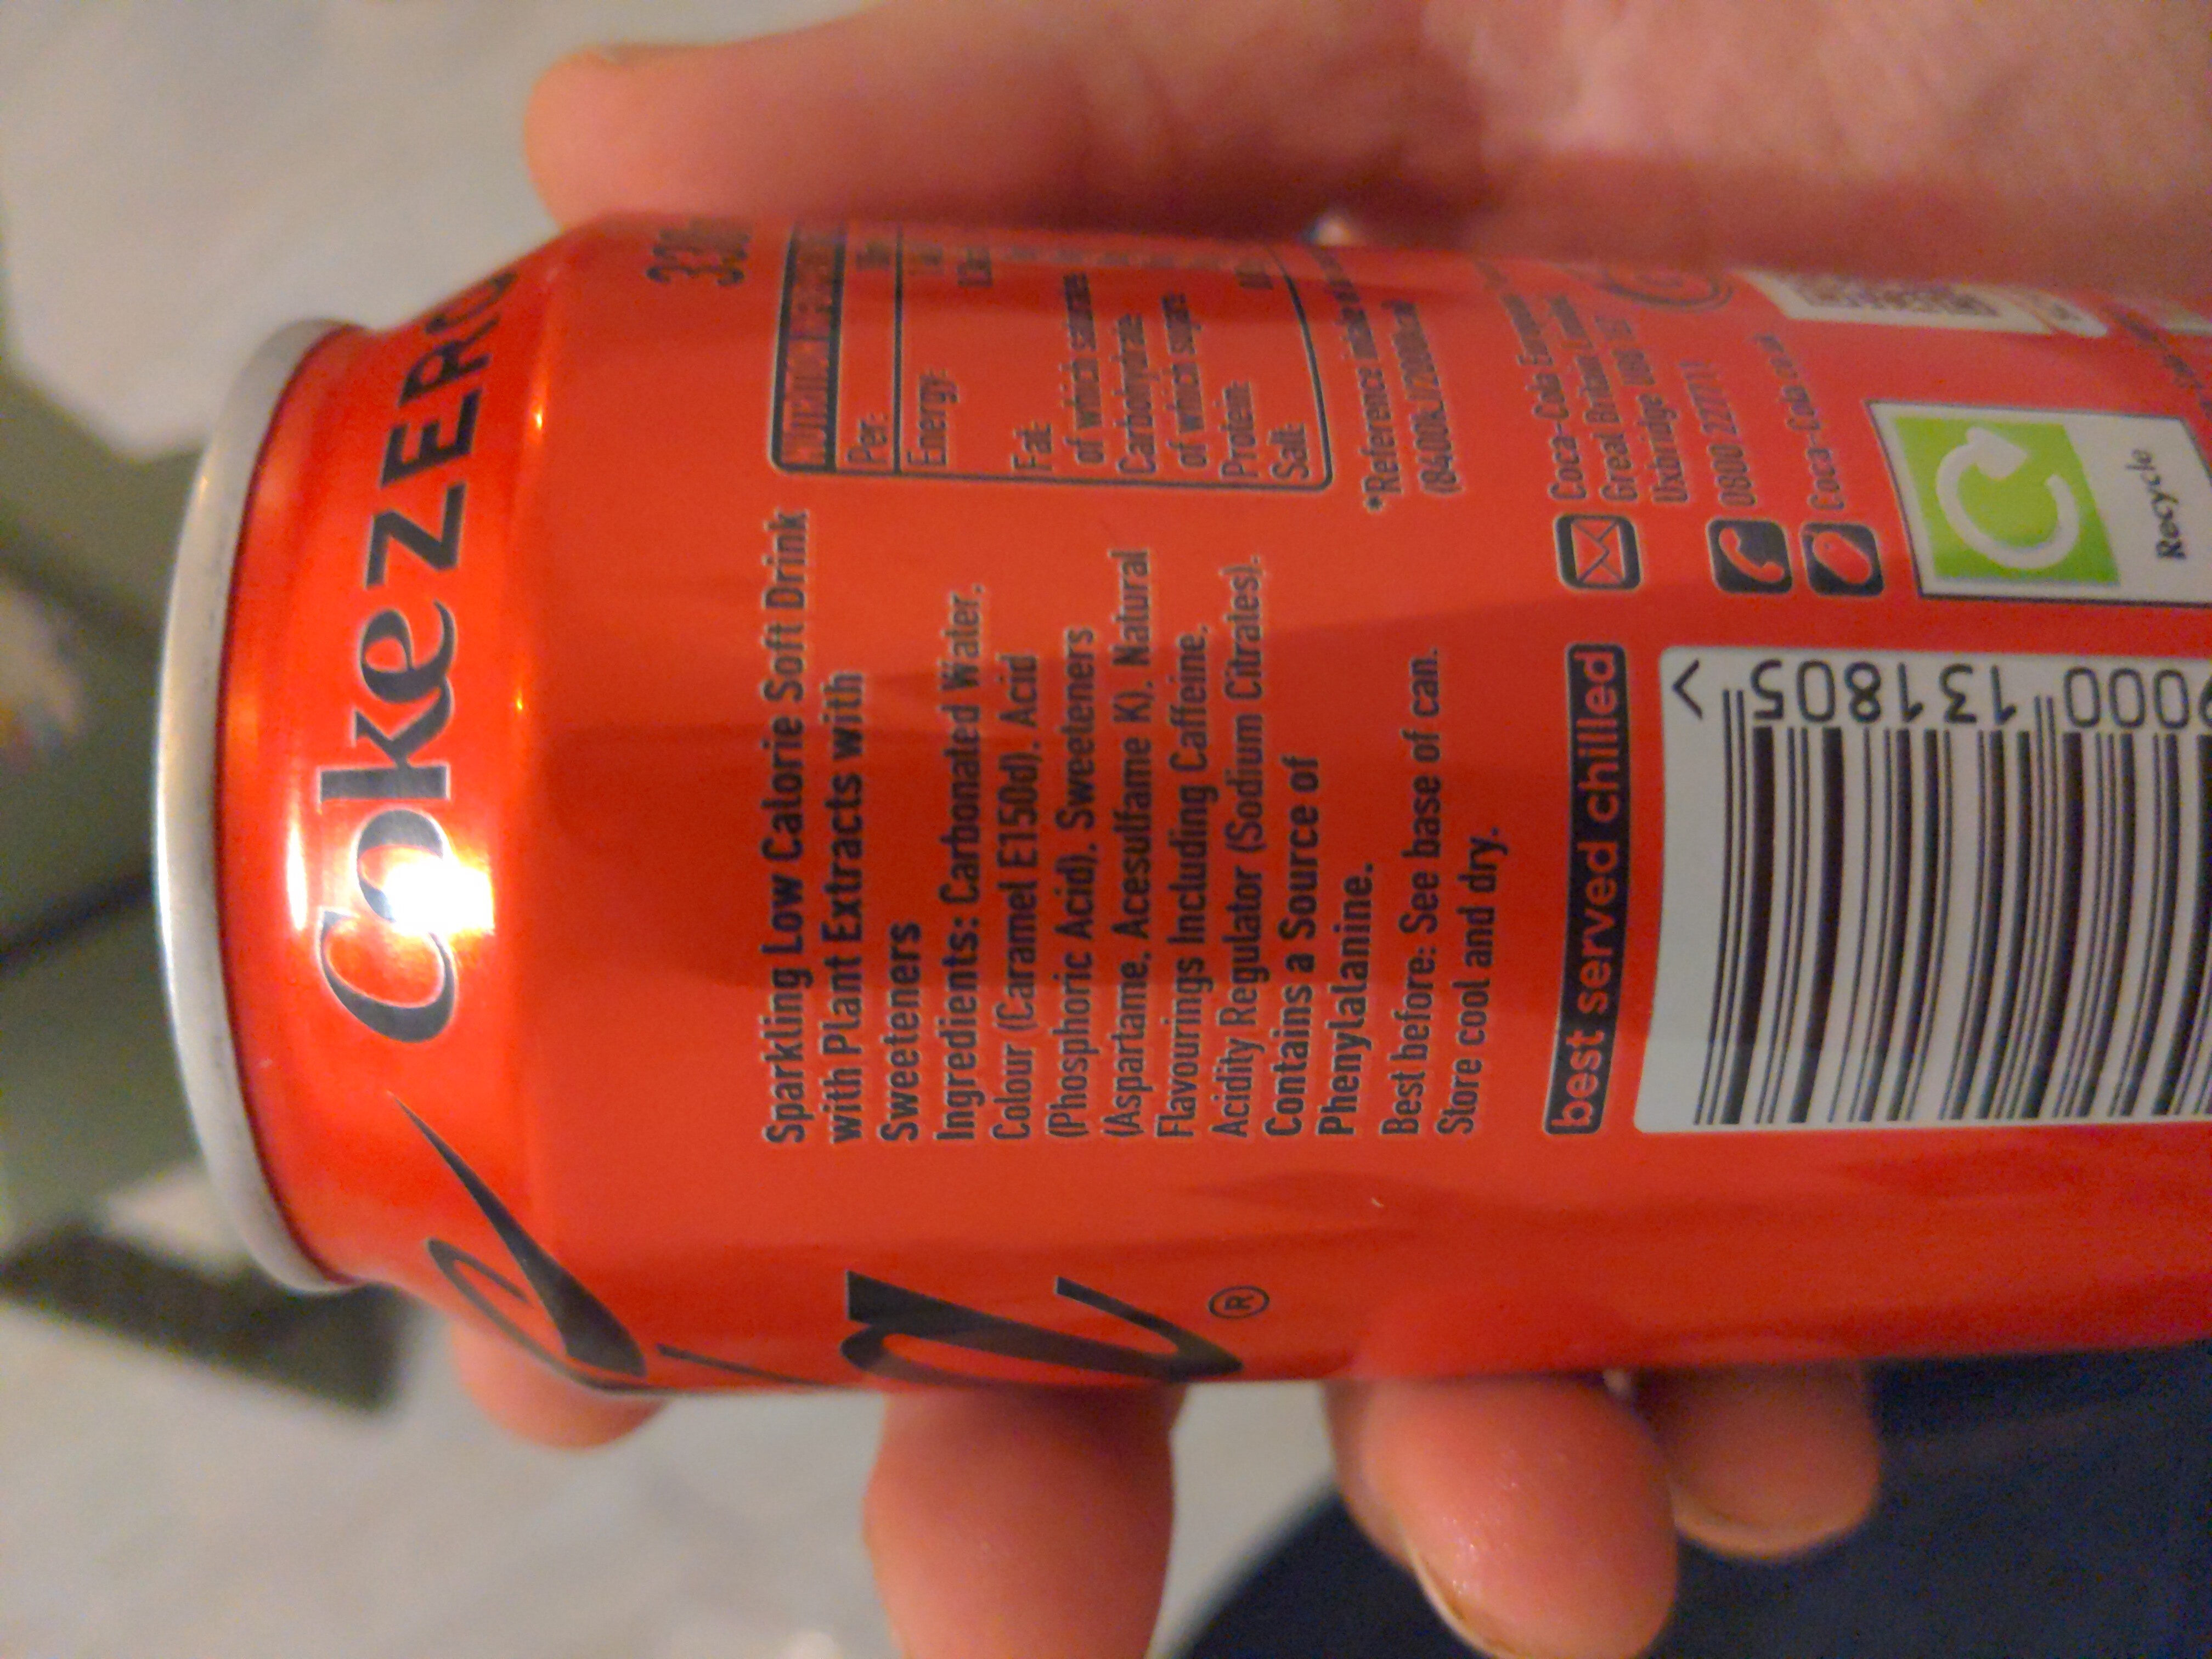 Coca cola 330 zero - Ingredients - en